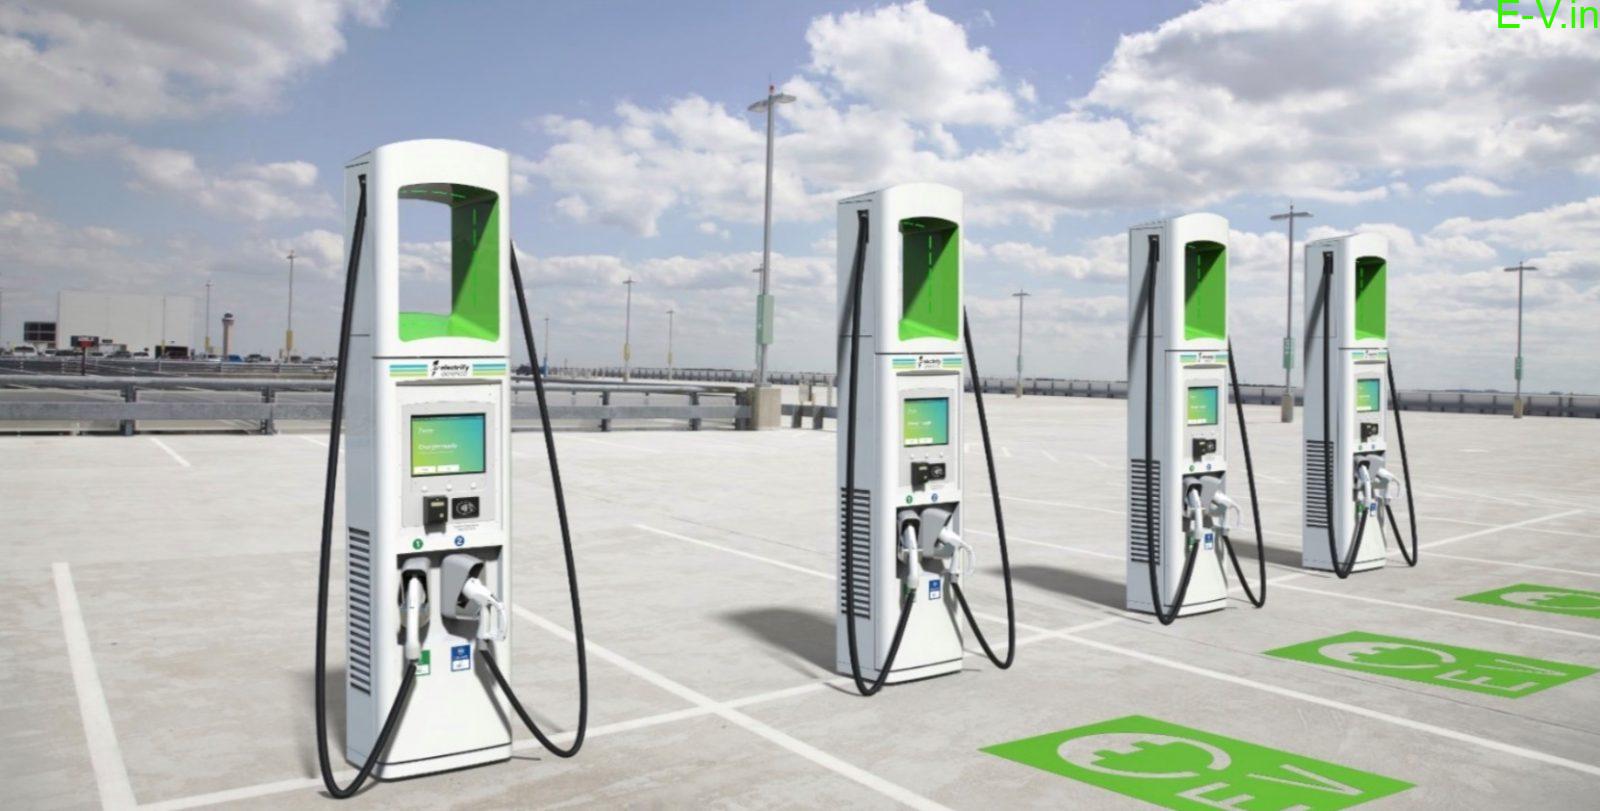 350 EV charging stations